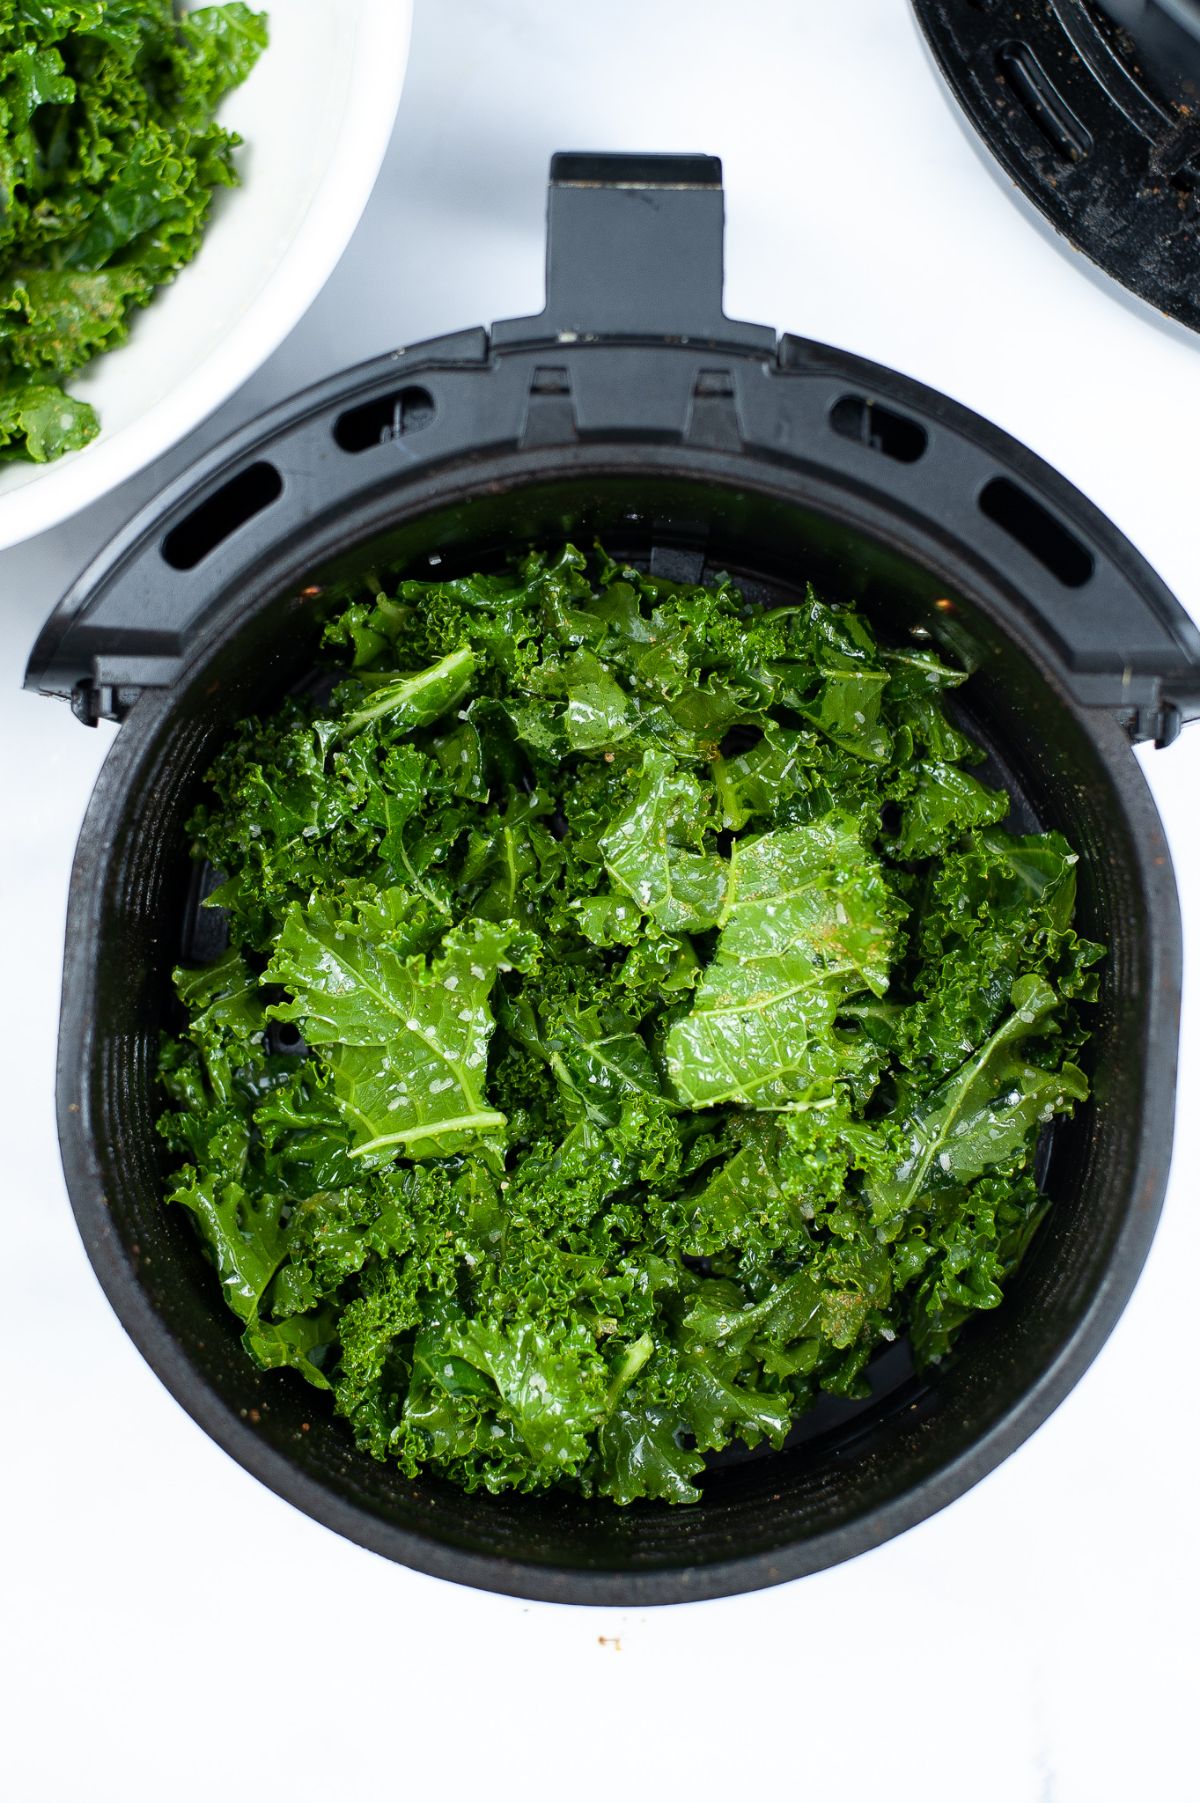 Seasoned Kale leaves in an air fryer basket ready for cooking.